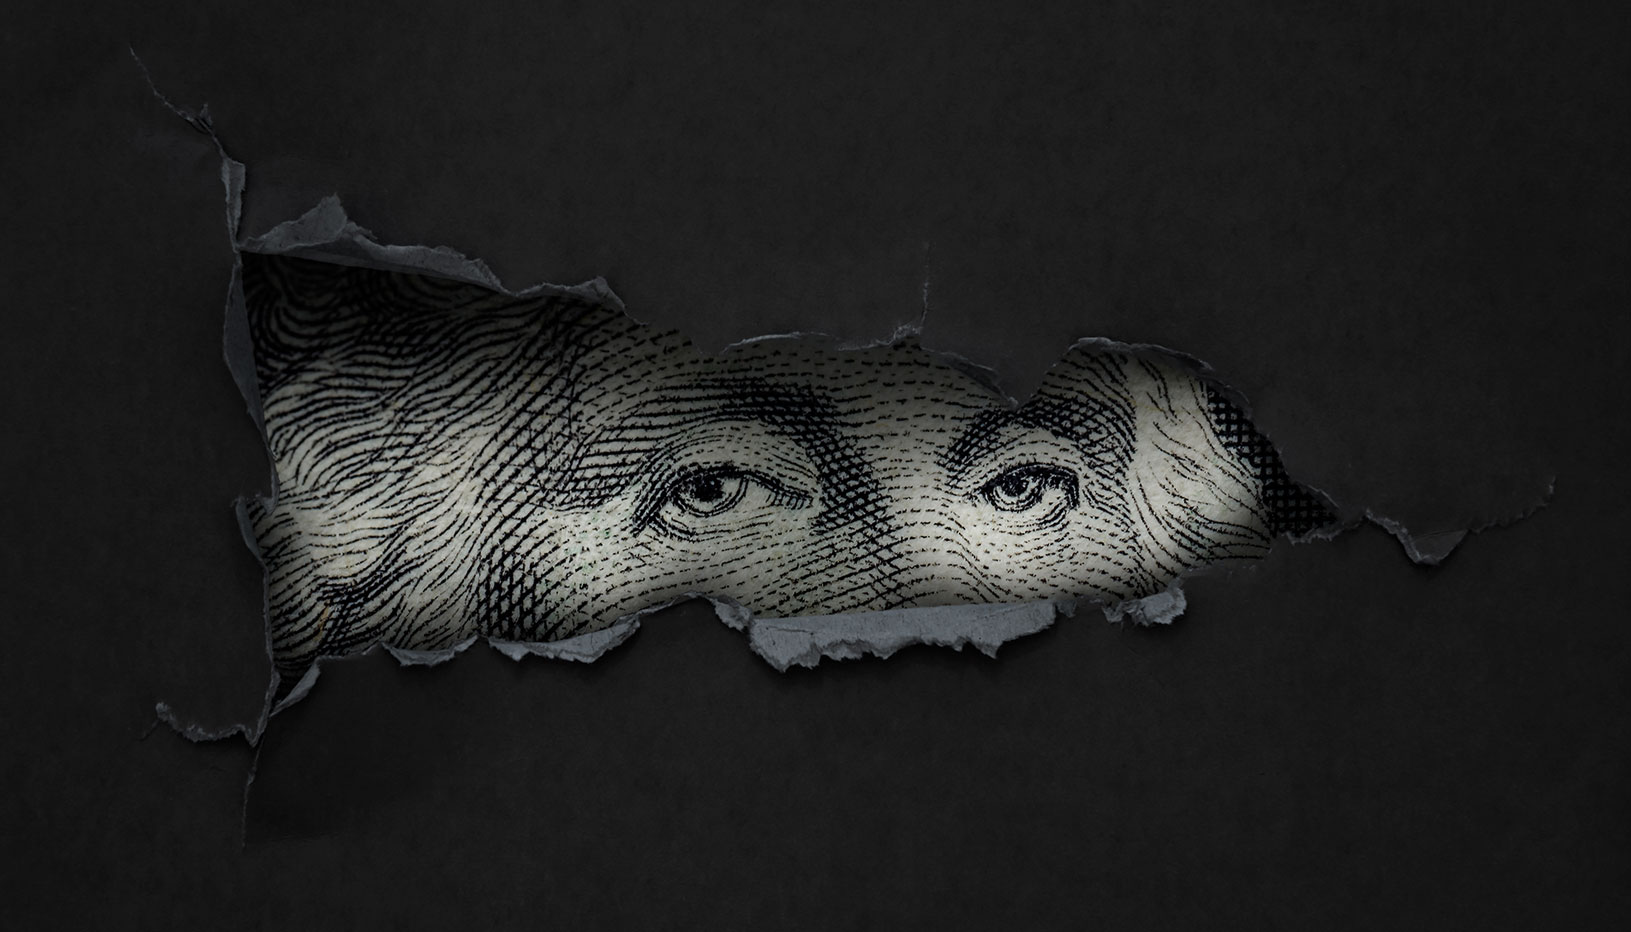 Dollar bill and George Washington's eyes